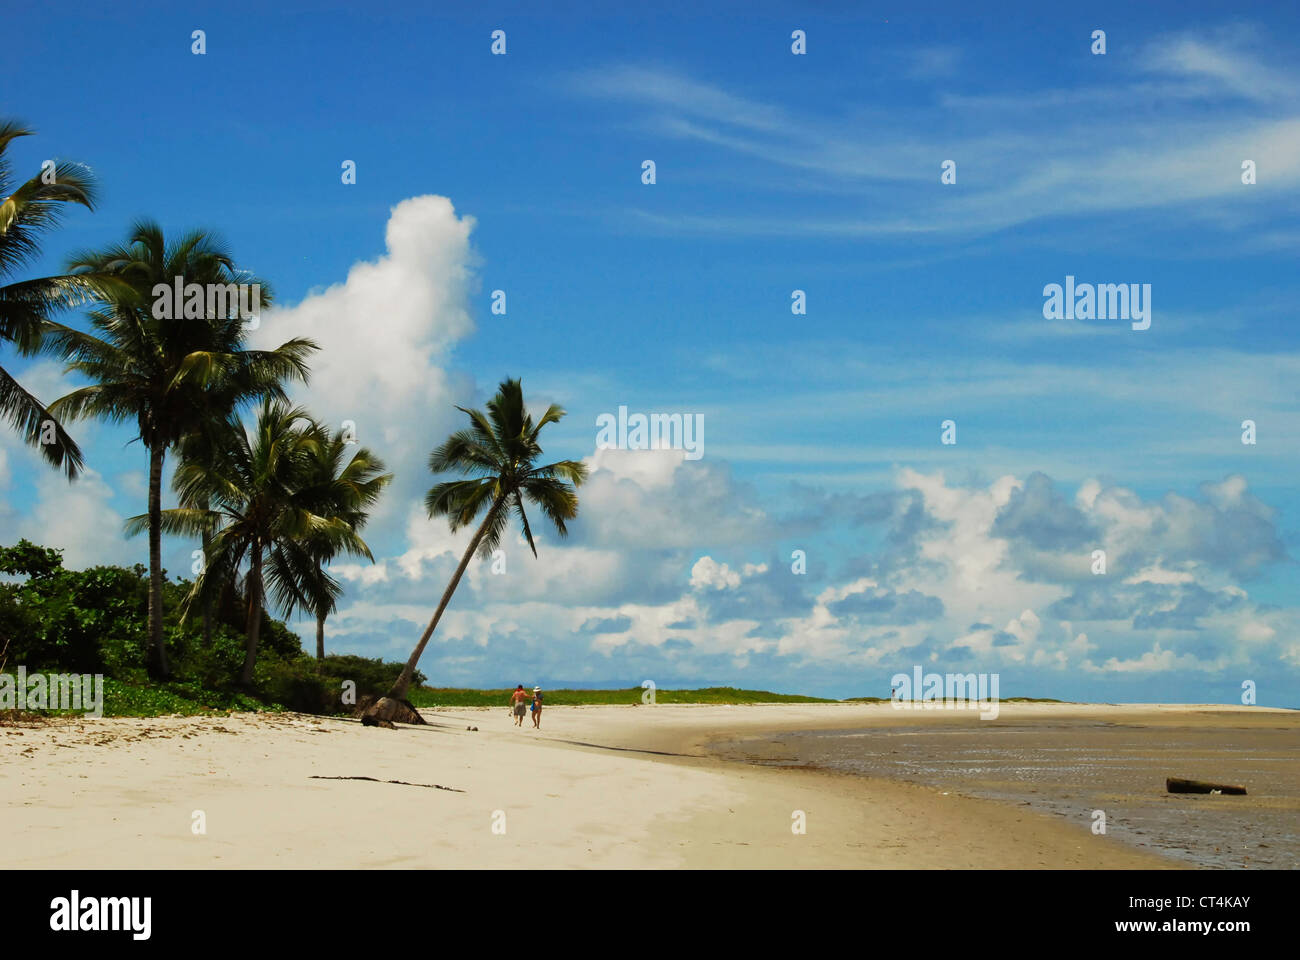 Brazil, Pernambuco, Ilha de Itamaraca, Corrao de Aviao, white beach with palm trees Stock Photo